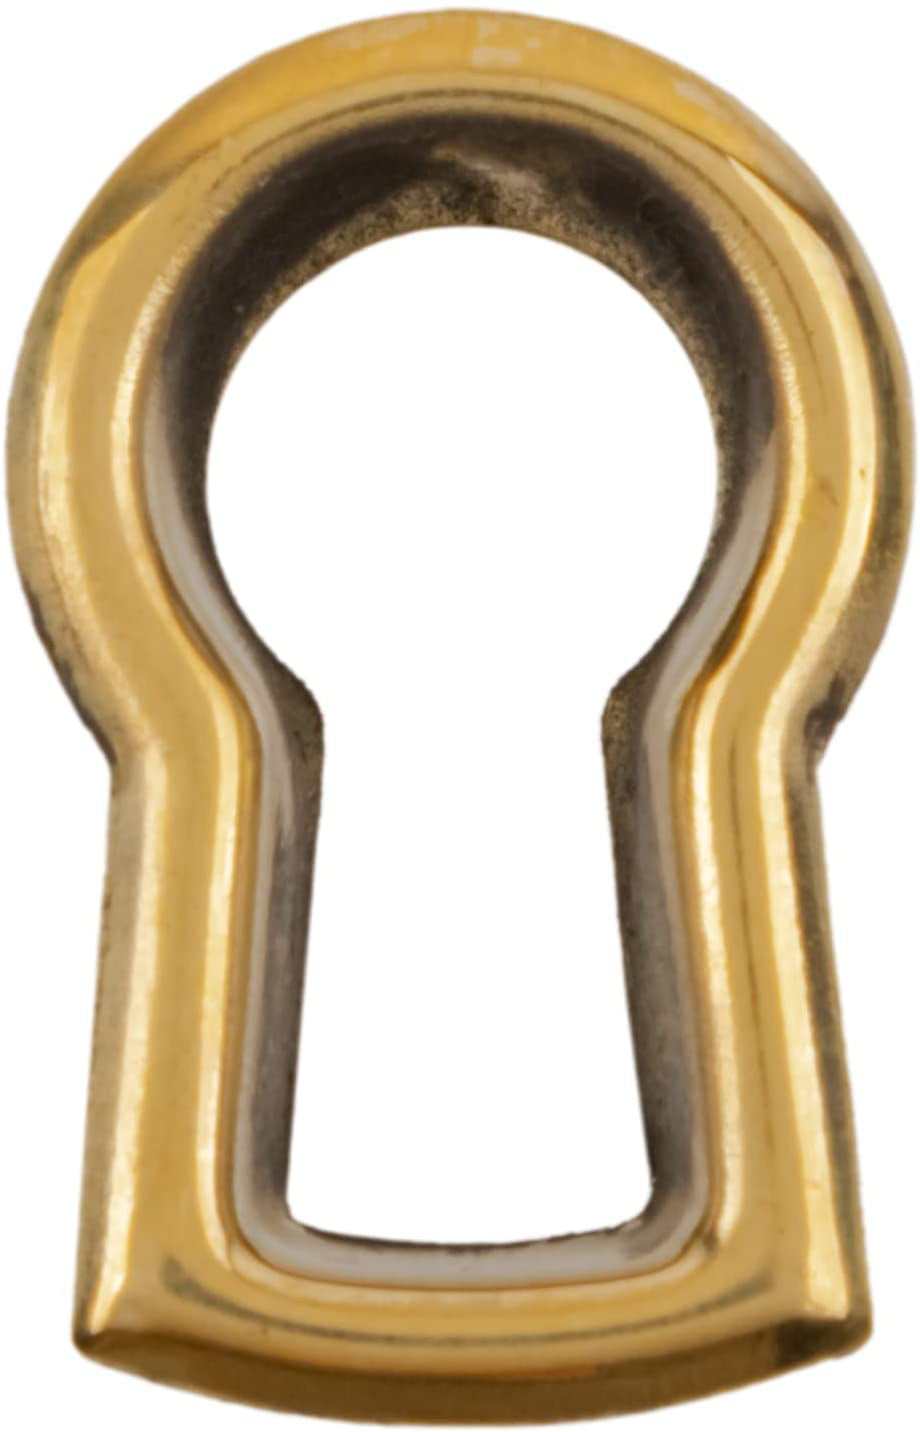 1 1/2" Keyhole Cover Plate Escutcheon Furniture Brass Key Hole Lock Plate 